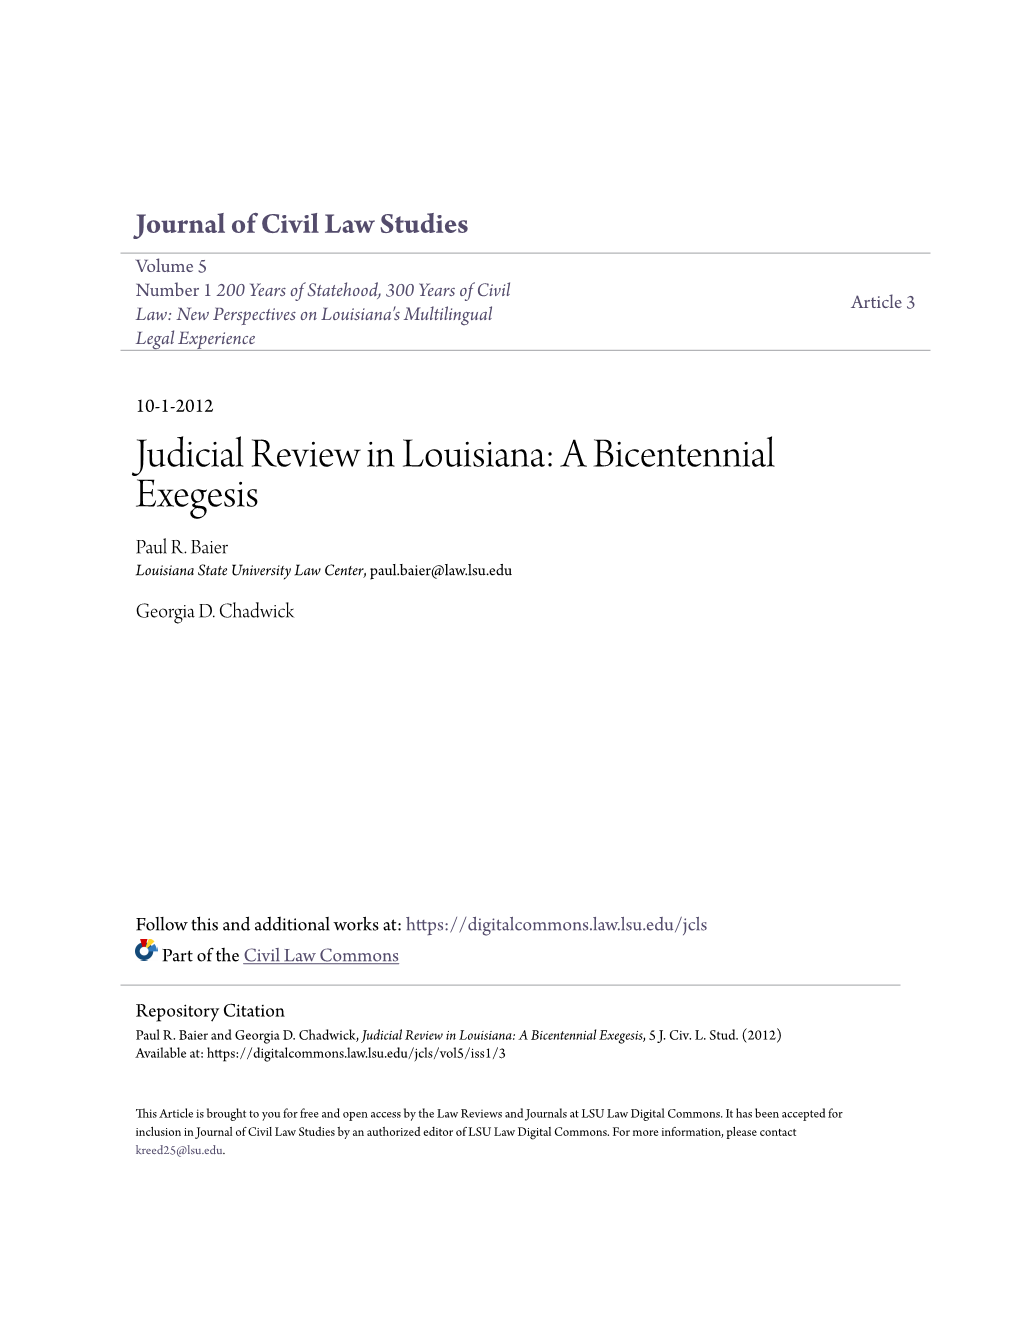 Judicial Review in Louisiana: a Bicentennial Exegesis Paul R